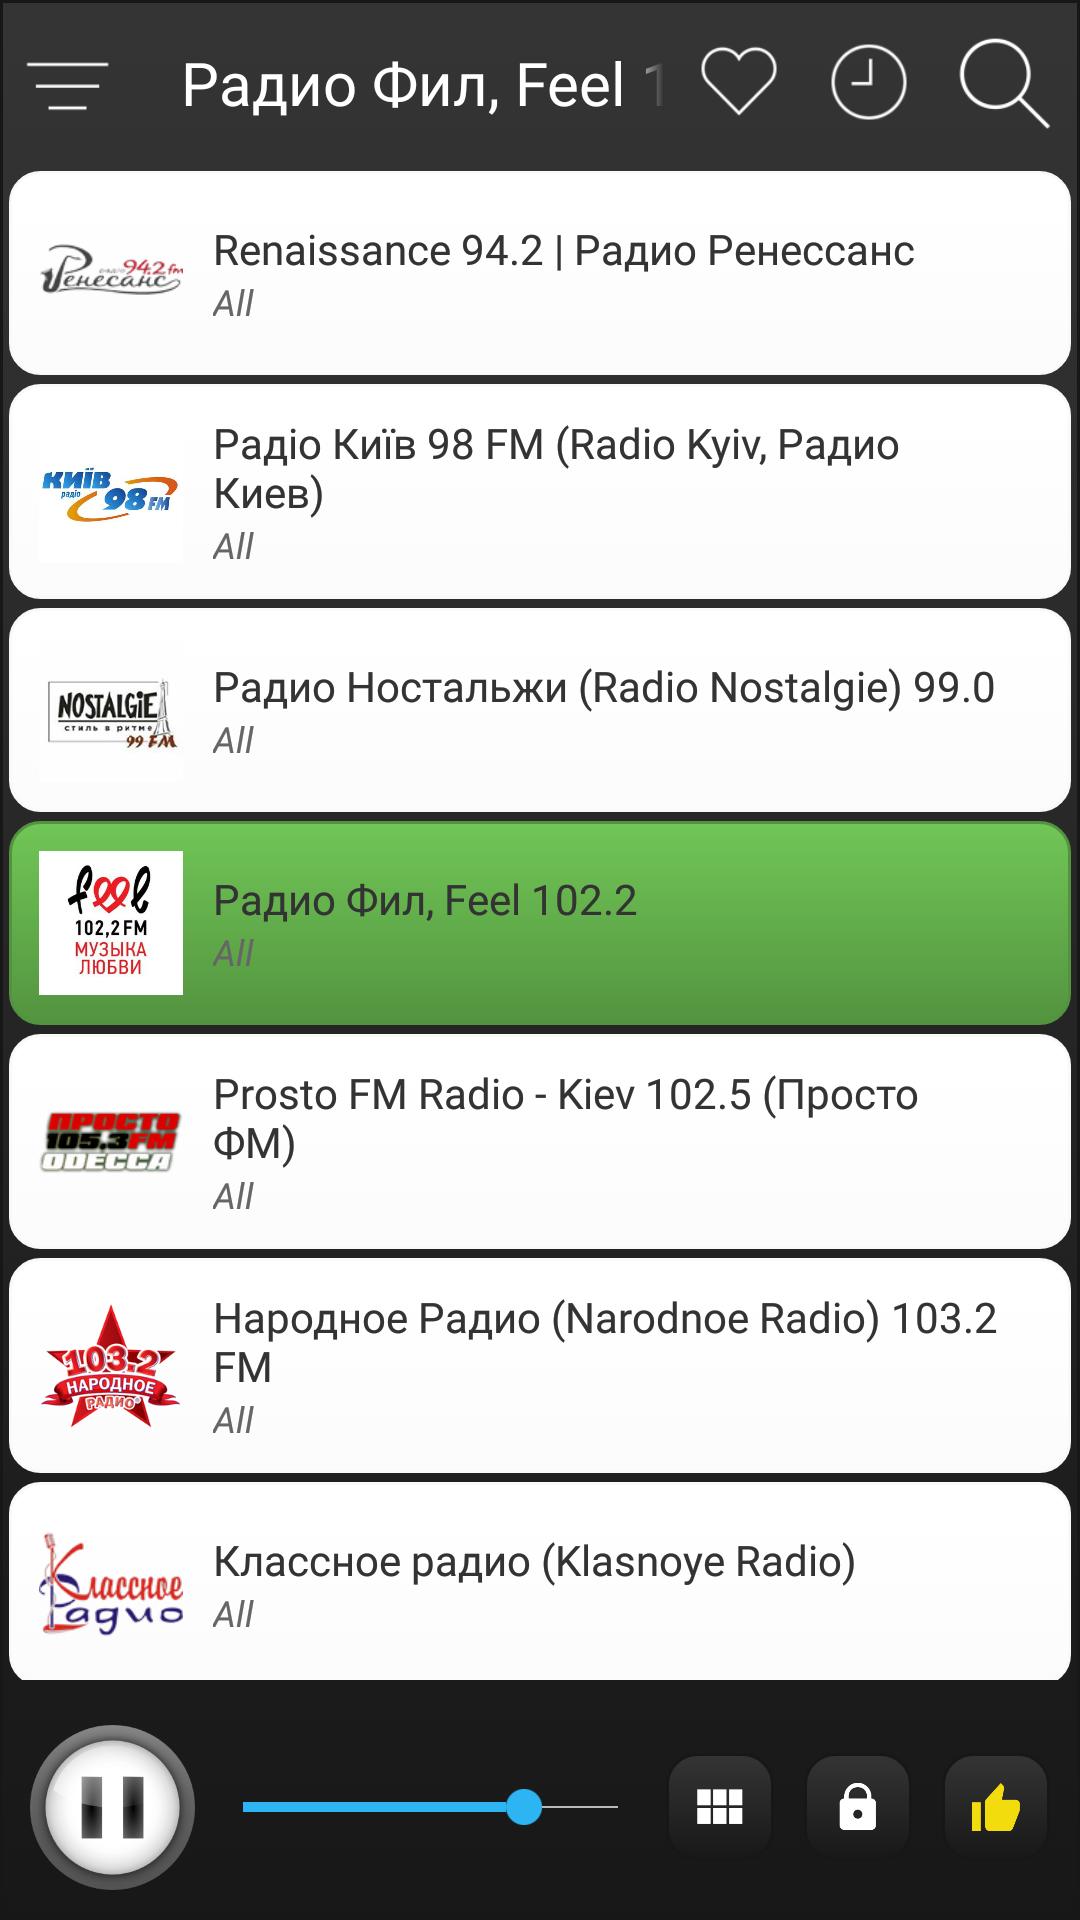 Ukraine Radio FM Free Online for Android - APK Download